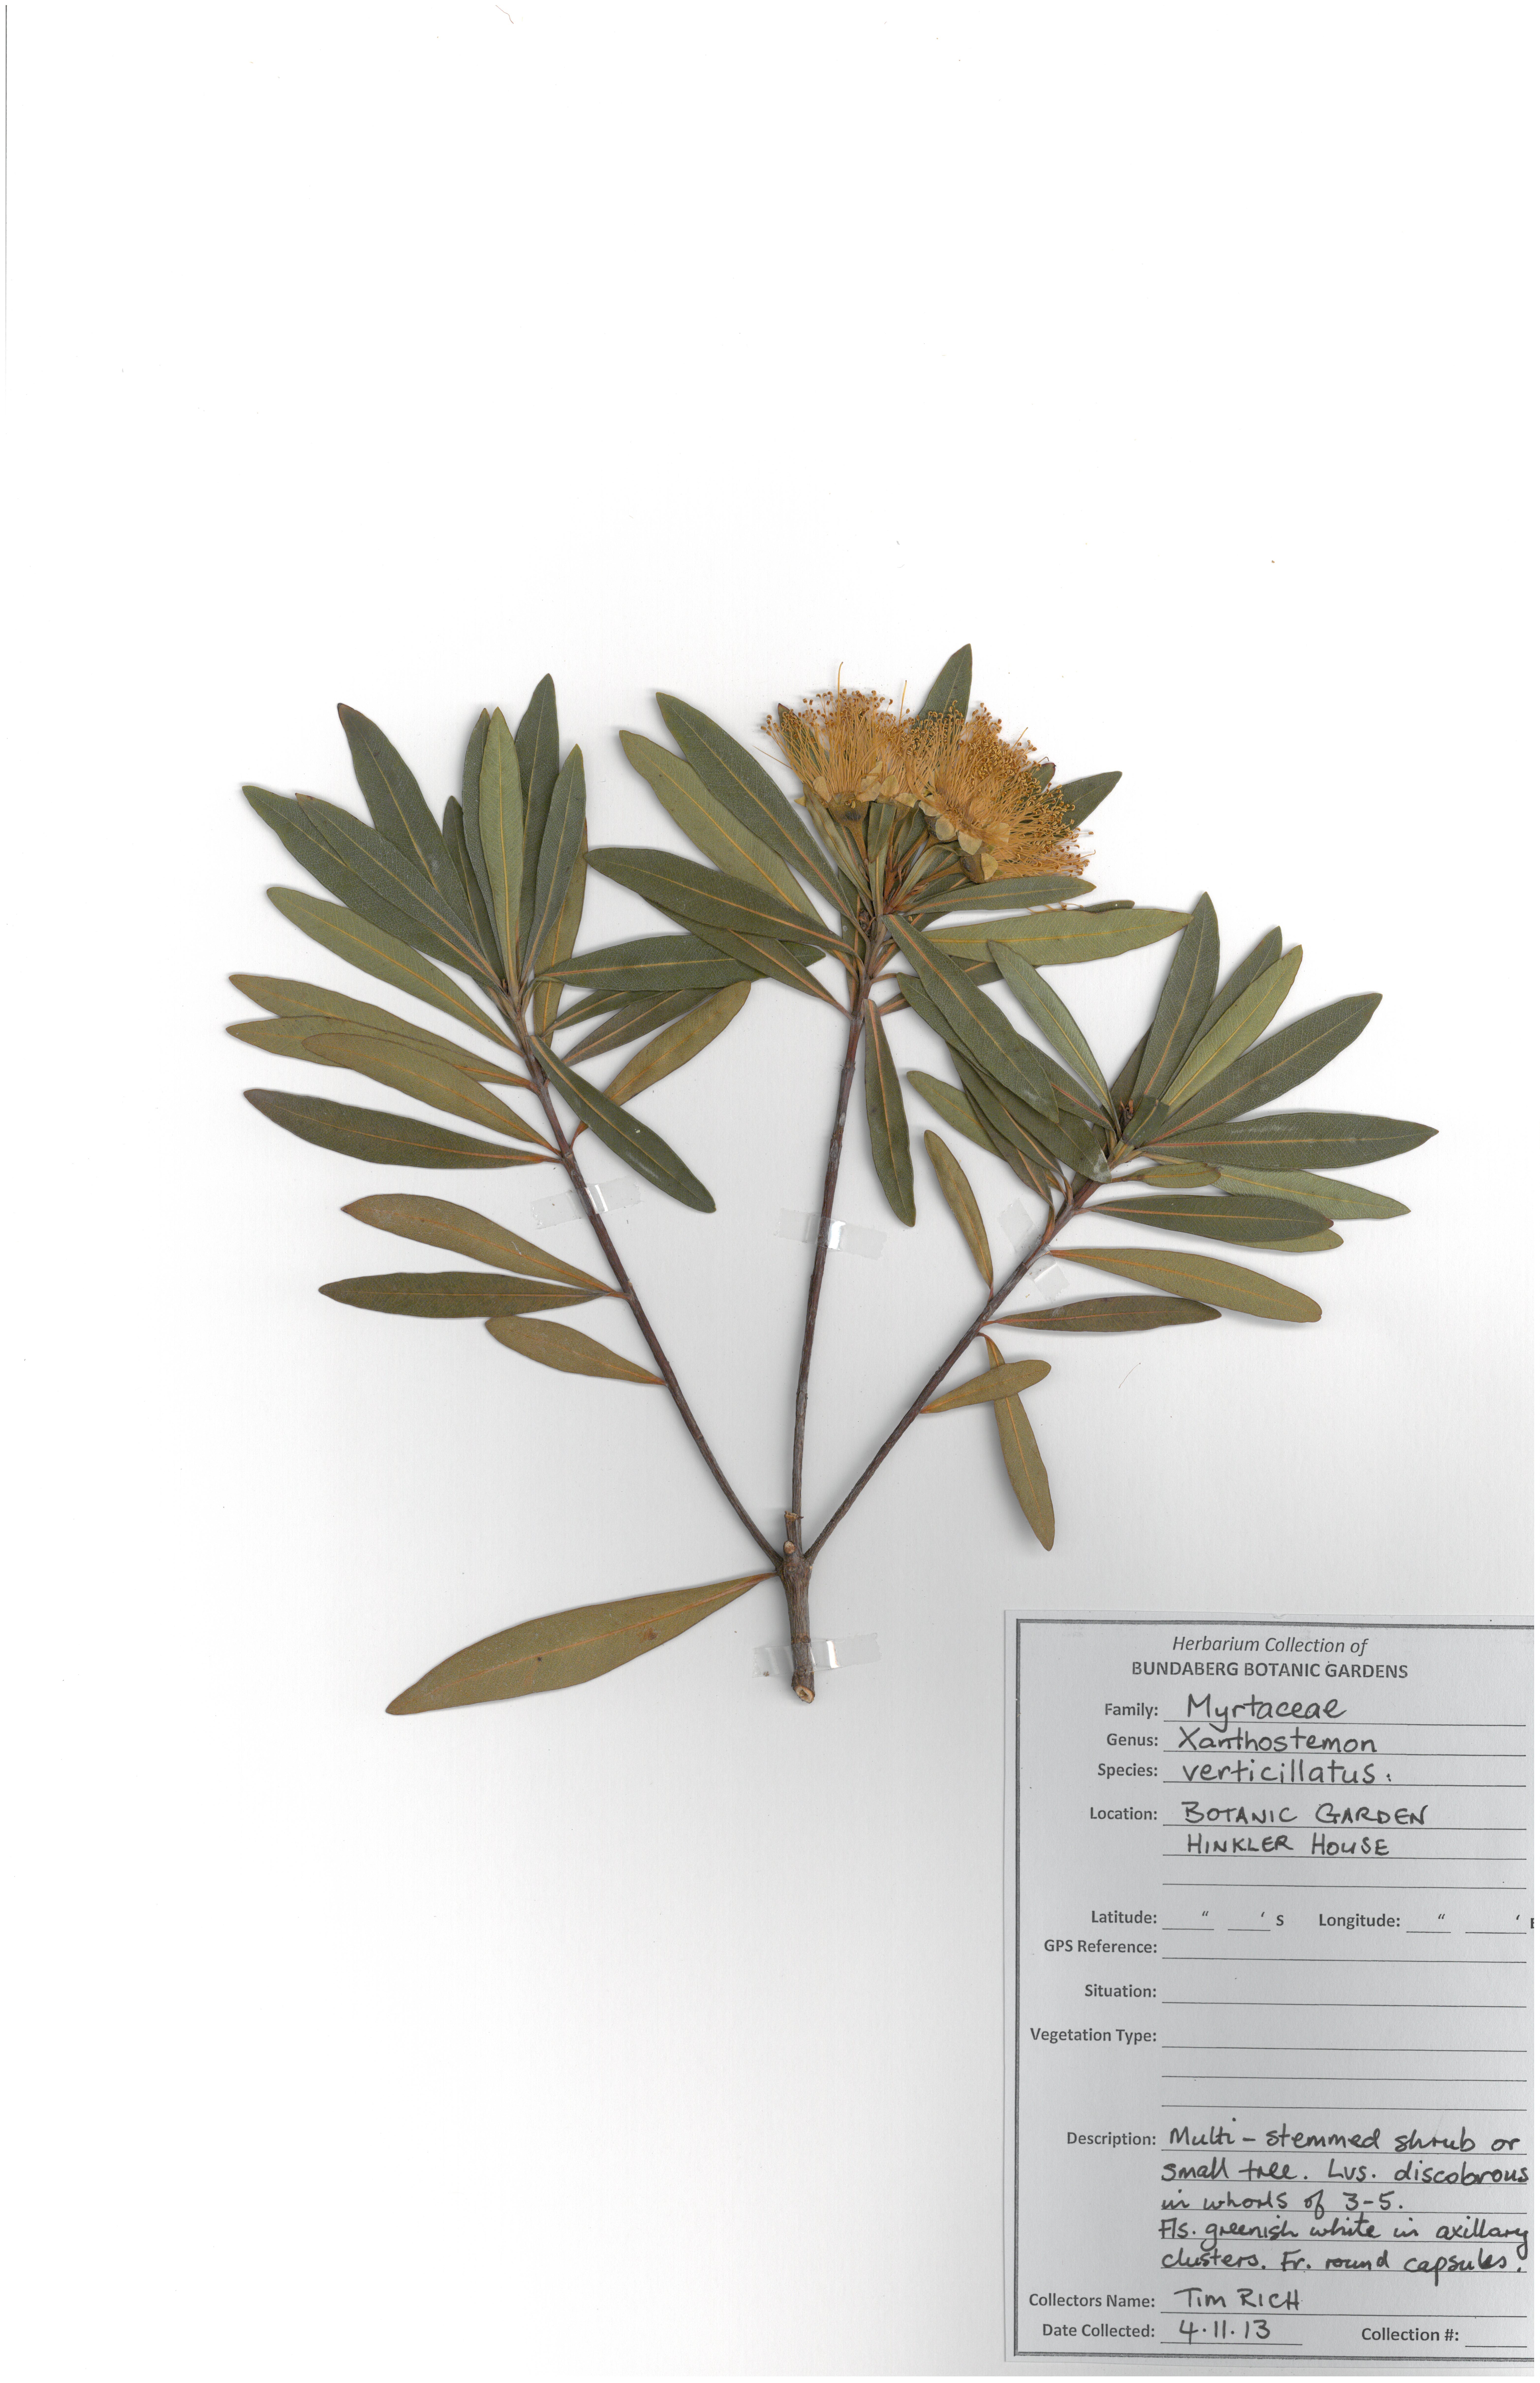 Myrtaceae xanthostemon verticillatus